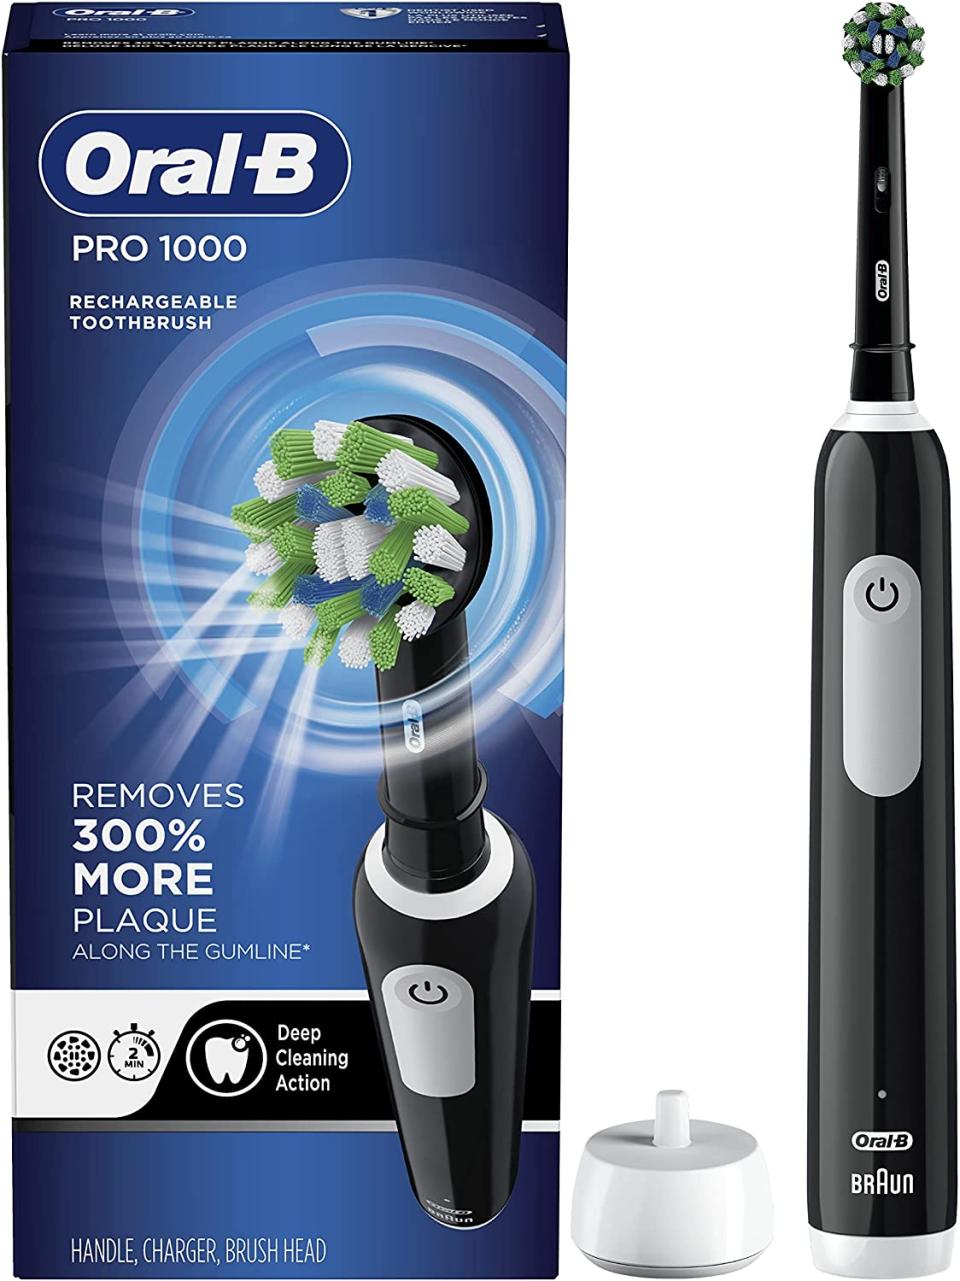 Oral-B Pro 1000 Electric Toothbrush. Image via Amazon.